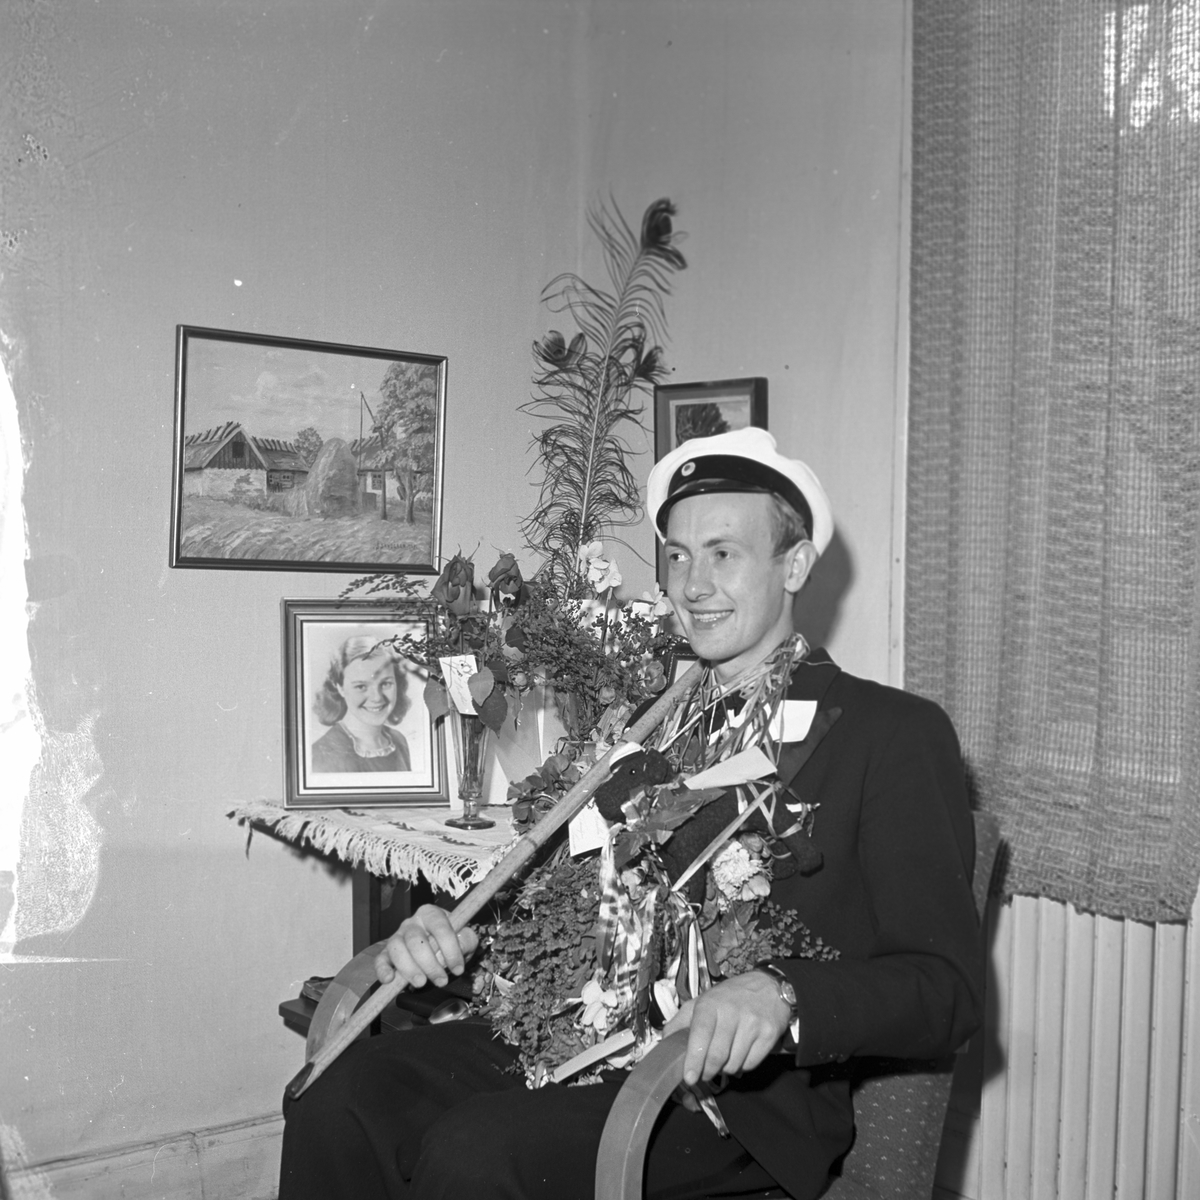 Student Eric Lund, Bro, Kerstinbo. 10 juni 1948. Tagit i hemmet.